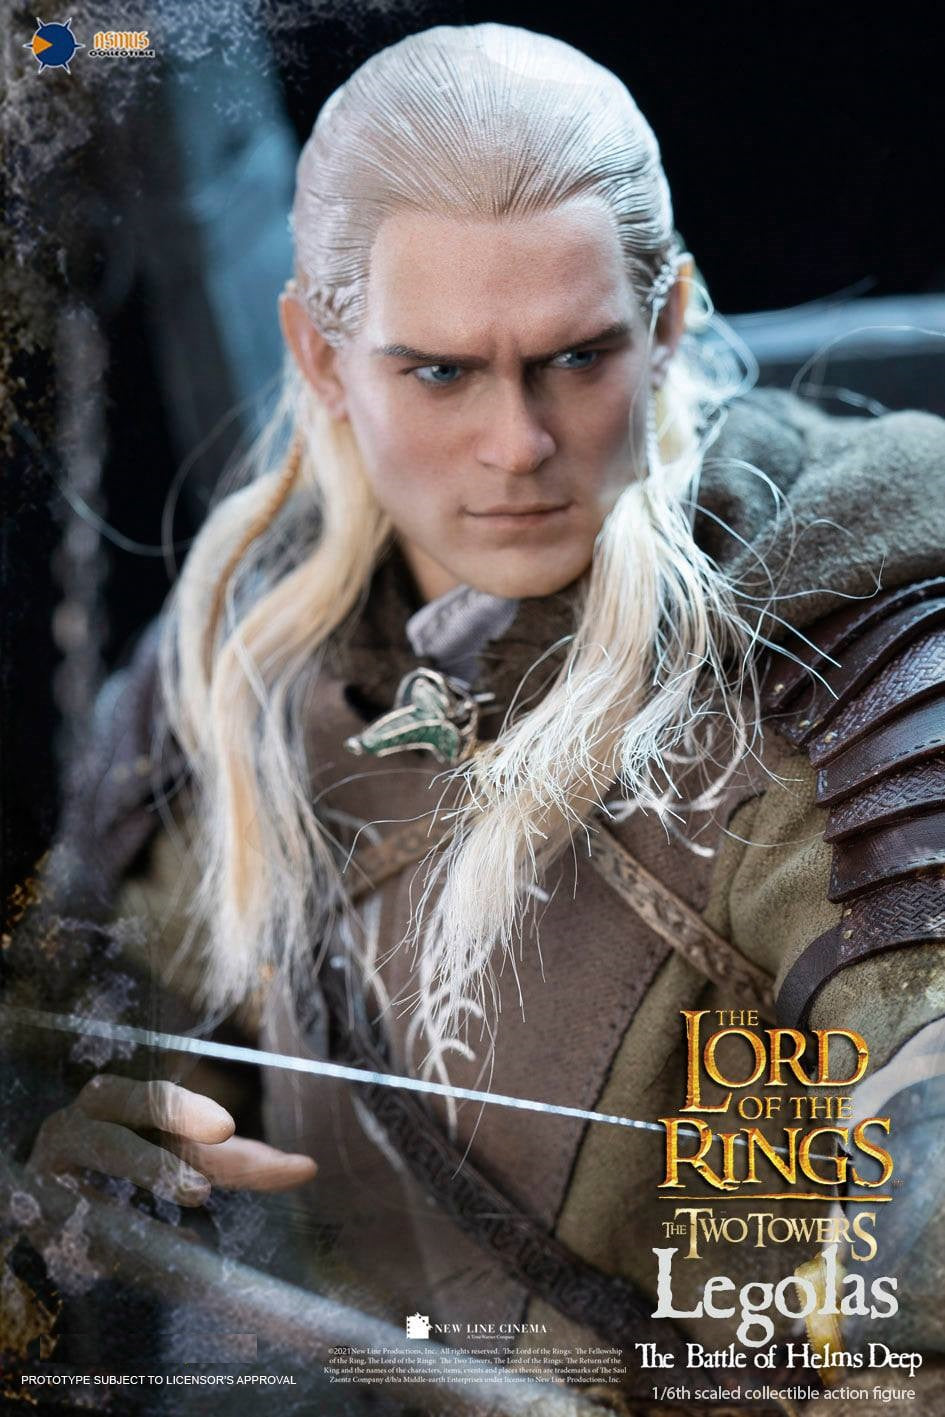 Pedido Figura Legolas "The Battle of Helms Deep" - The Lord of the Rings marca Asmus Toys LOTR029 escala 1/6